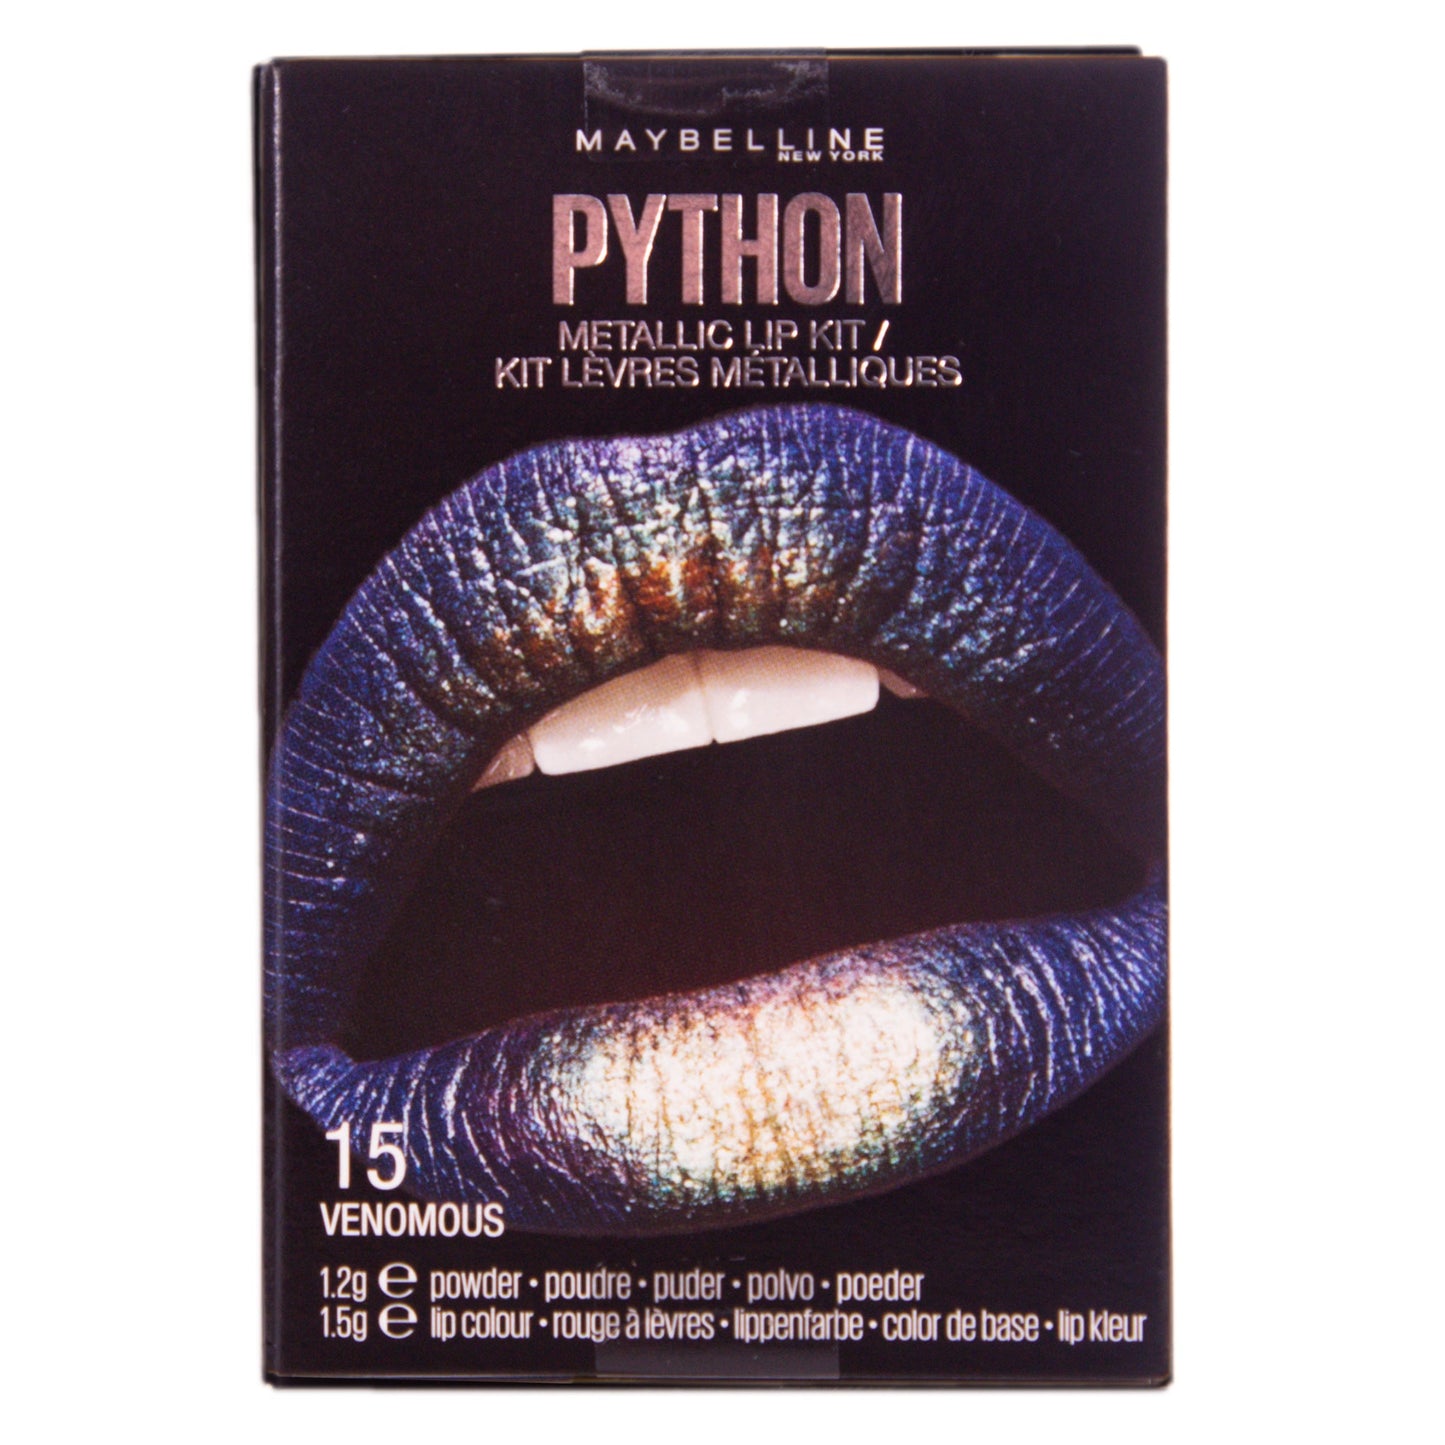 Maybelline Python Metallic Lip Kit Lipstick - Venemous